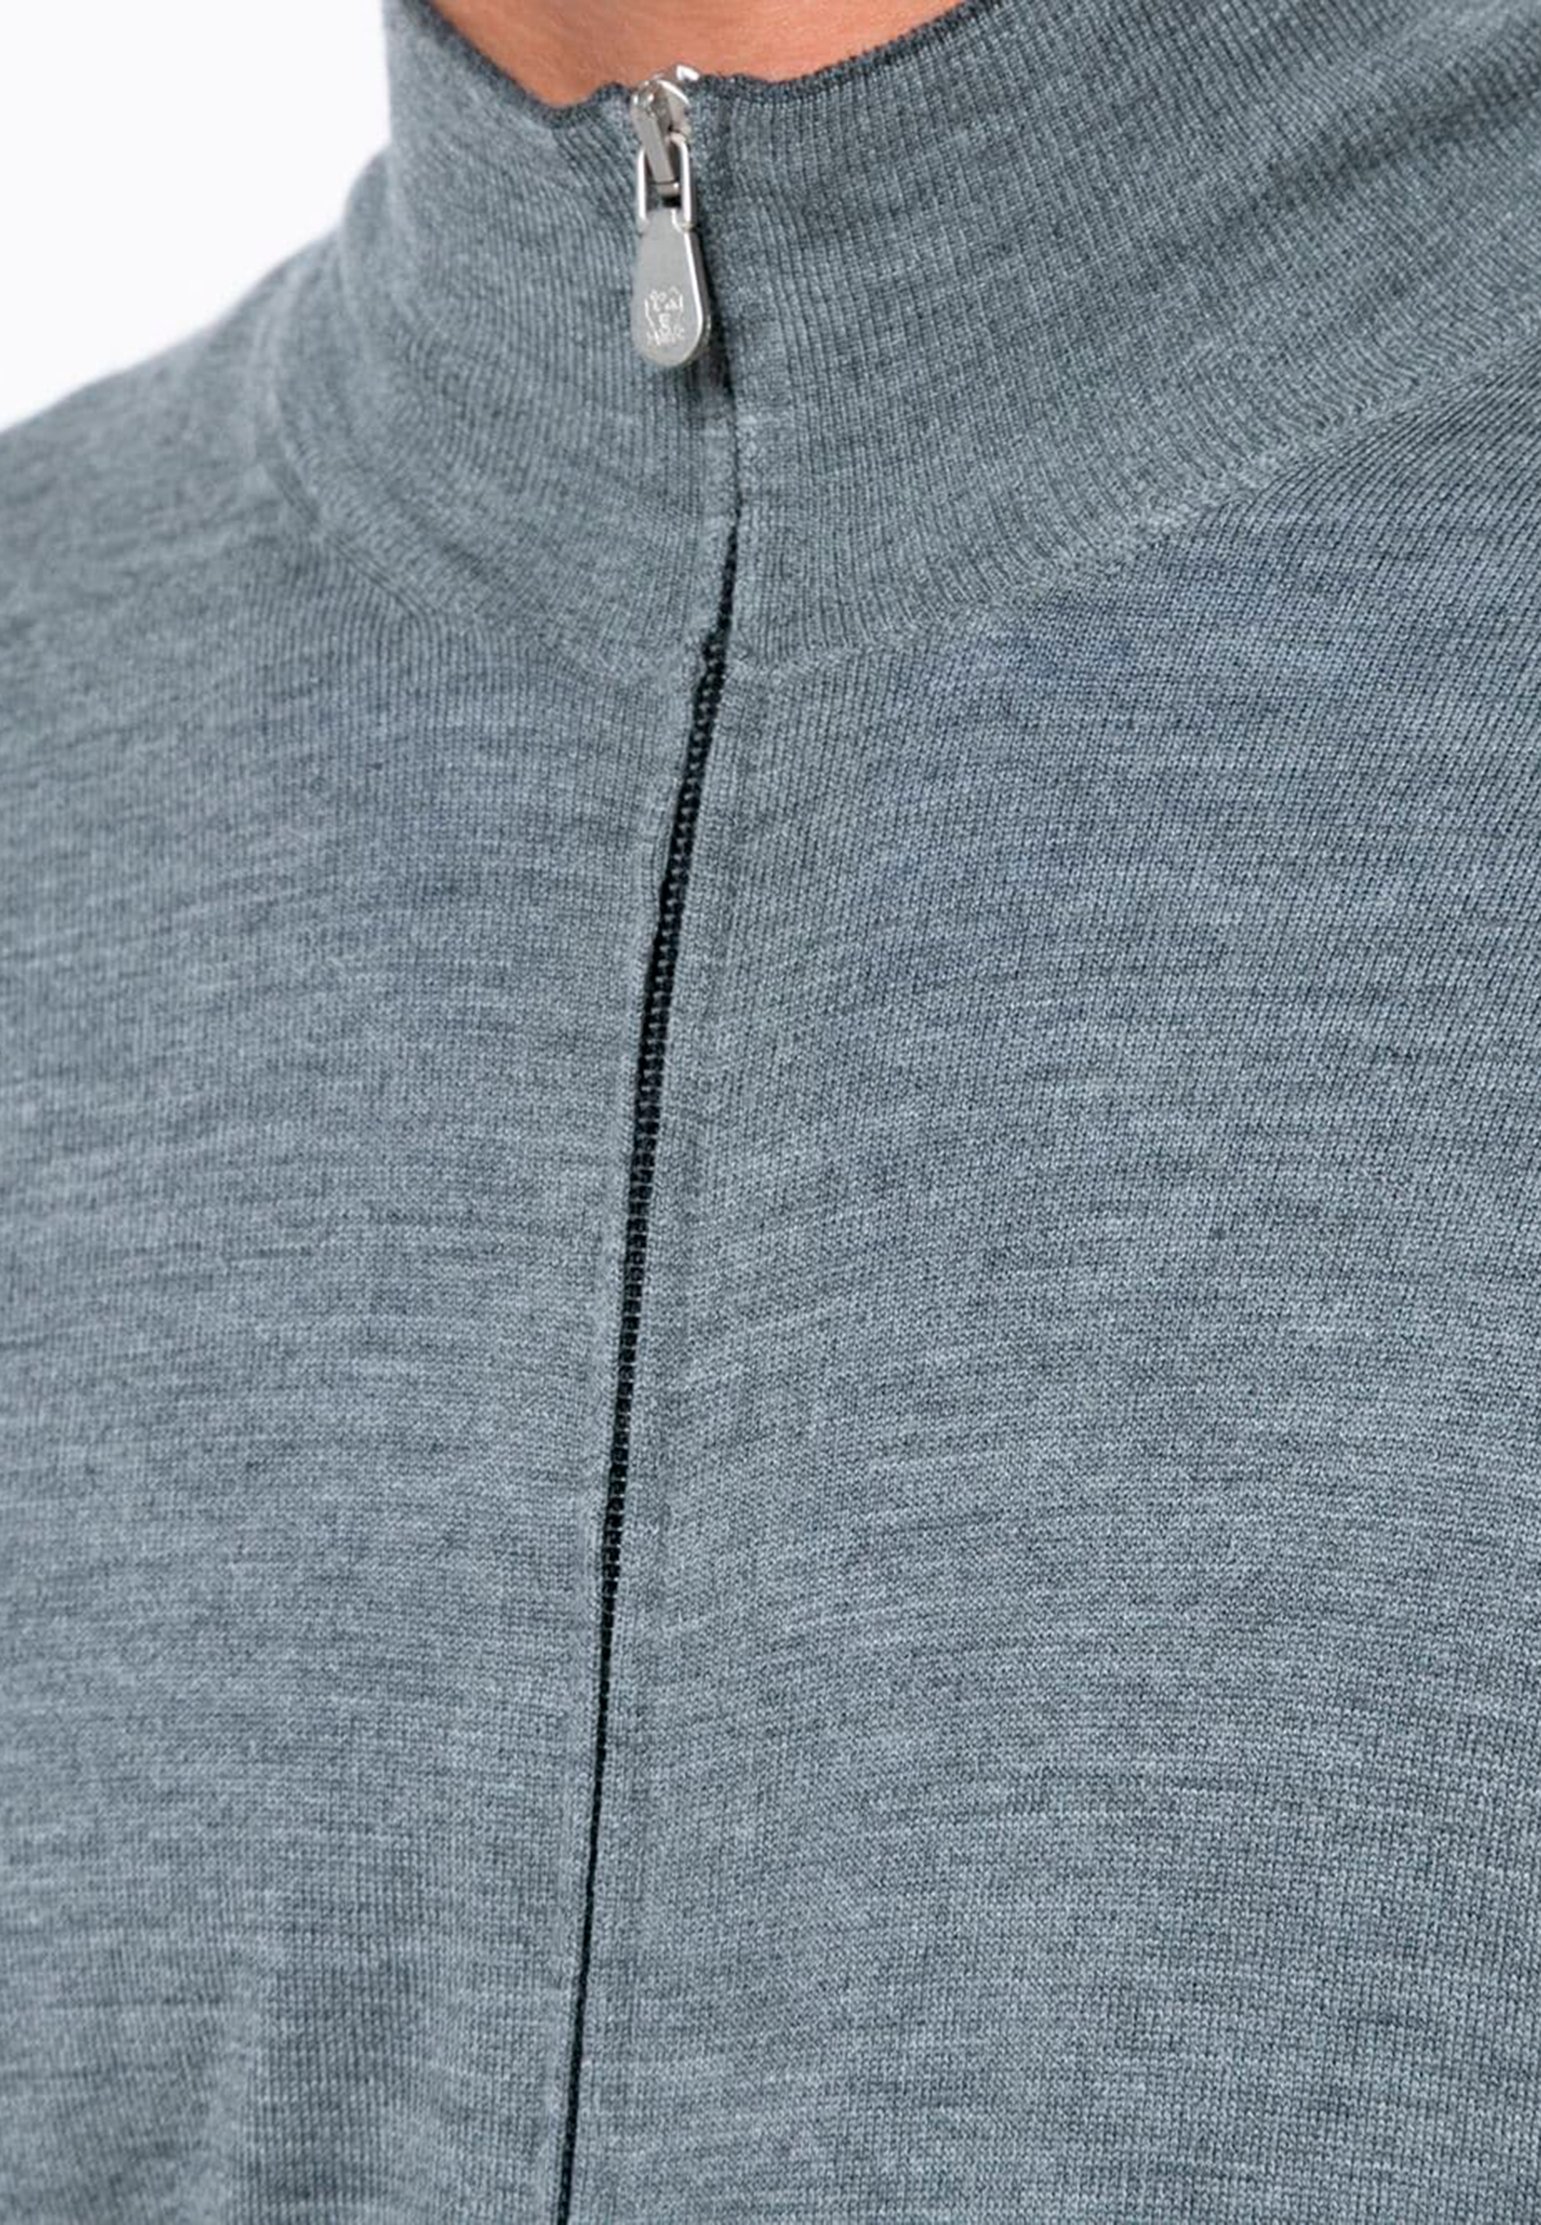 Veste BRUNELLO CUCINELLI Color: grey (Code: 770) in online store Allure